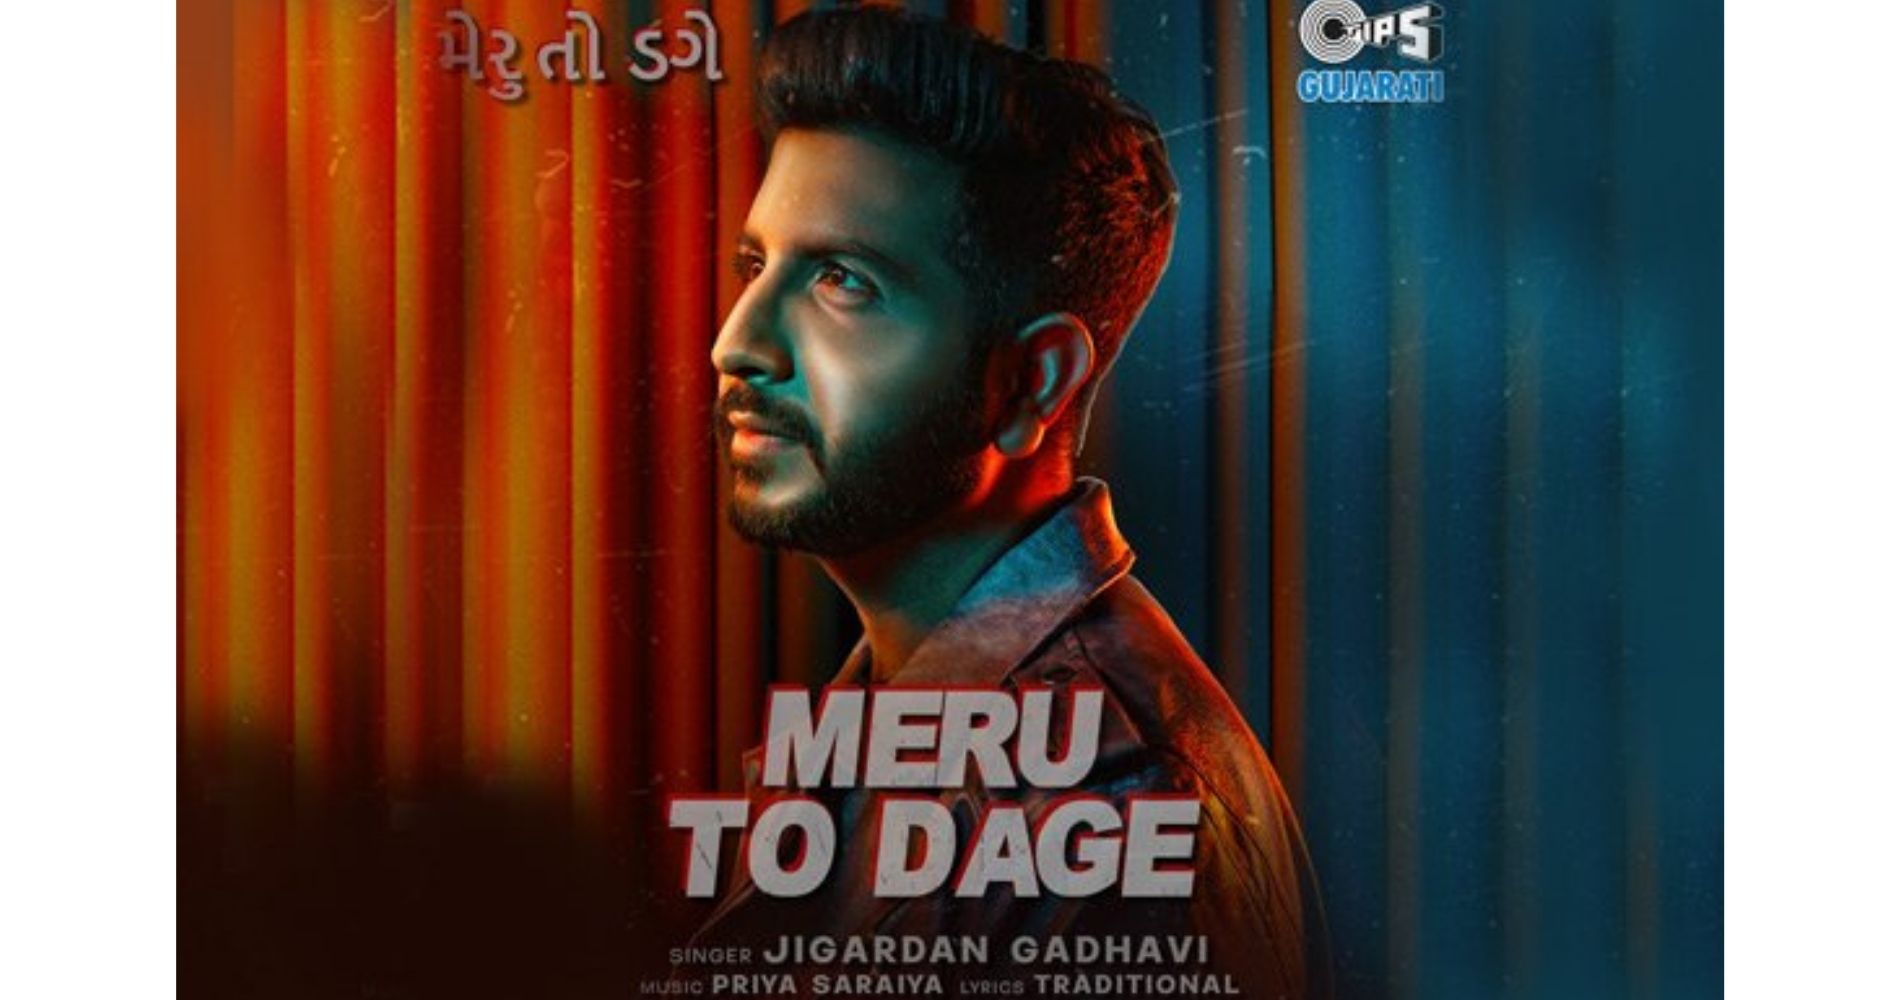 Tips music launches new Gujarati song  “Meru to Dage” sung by Jigardan Gadhavi